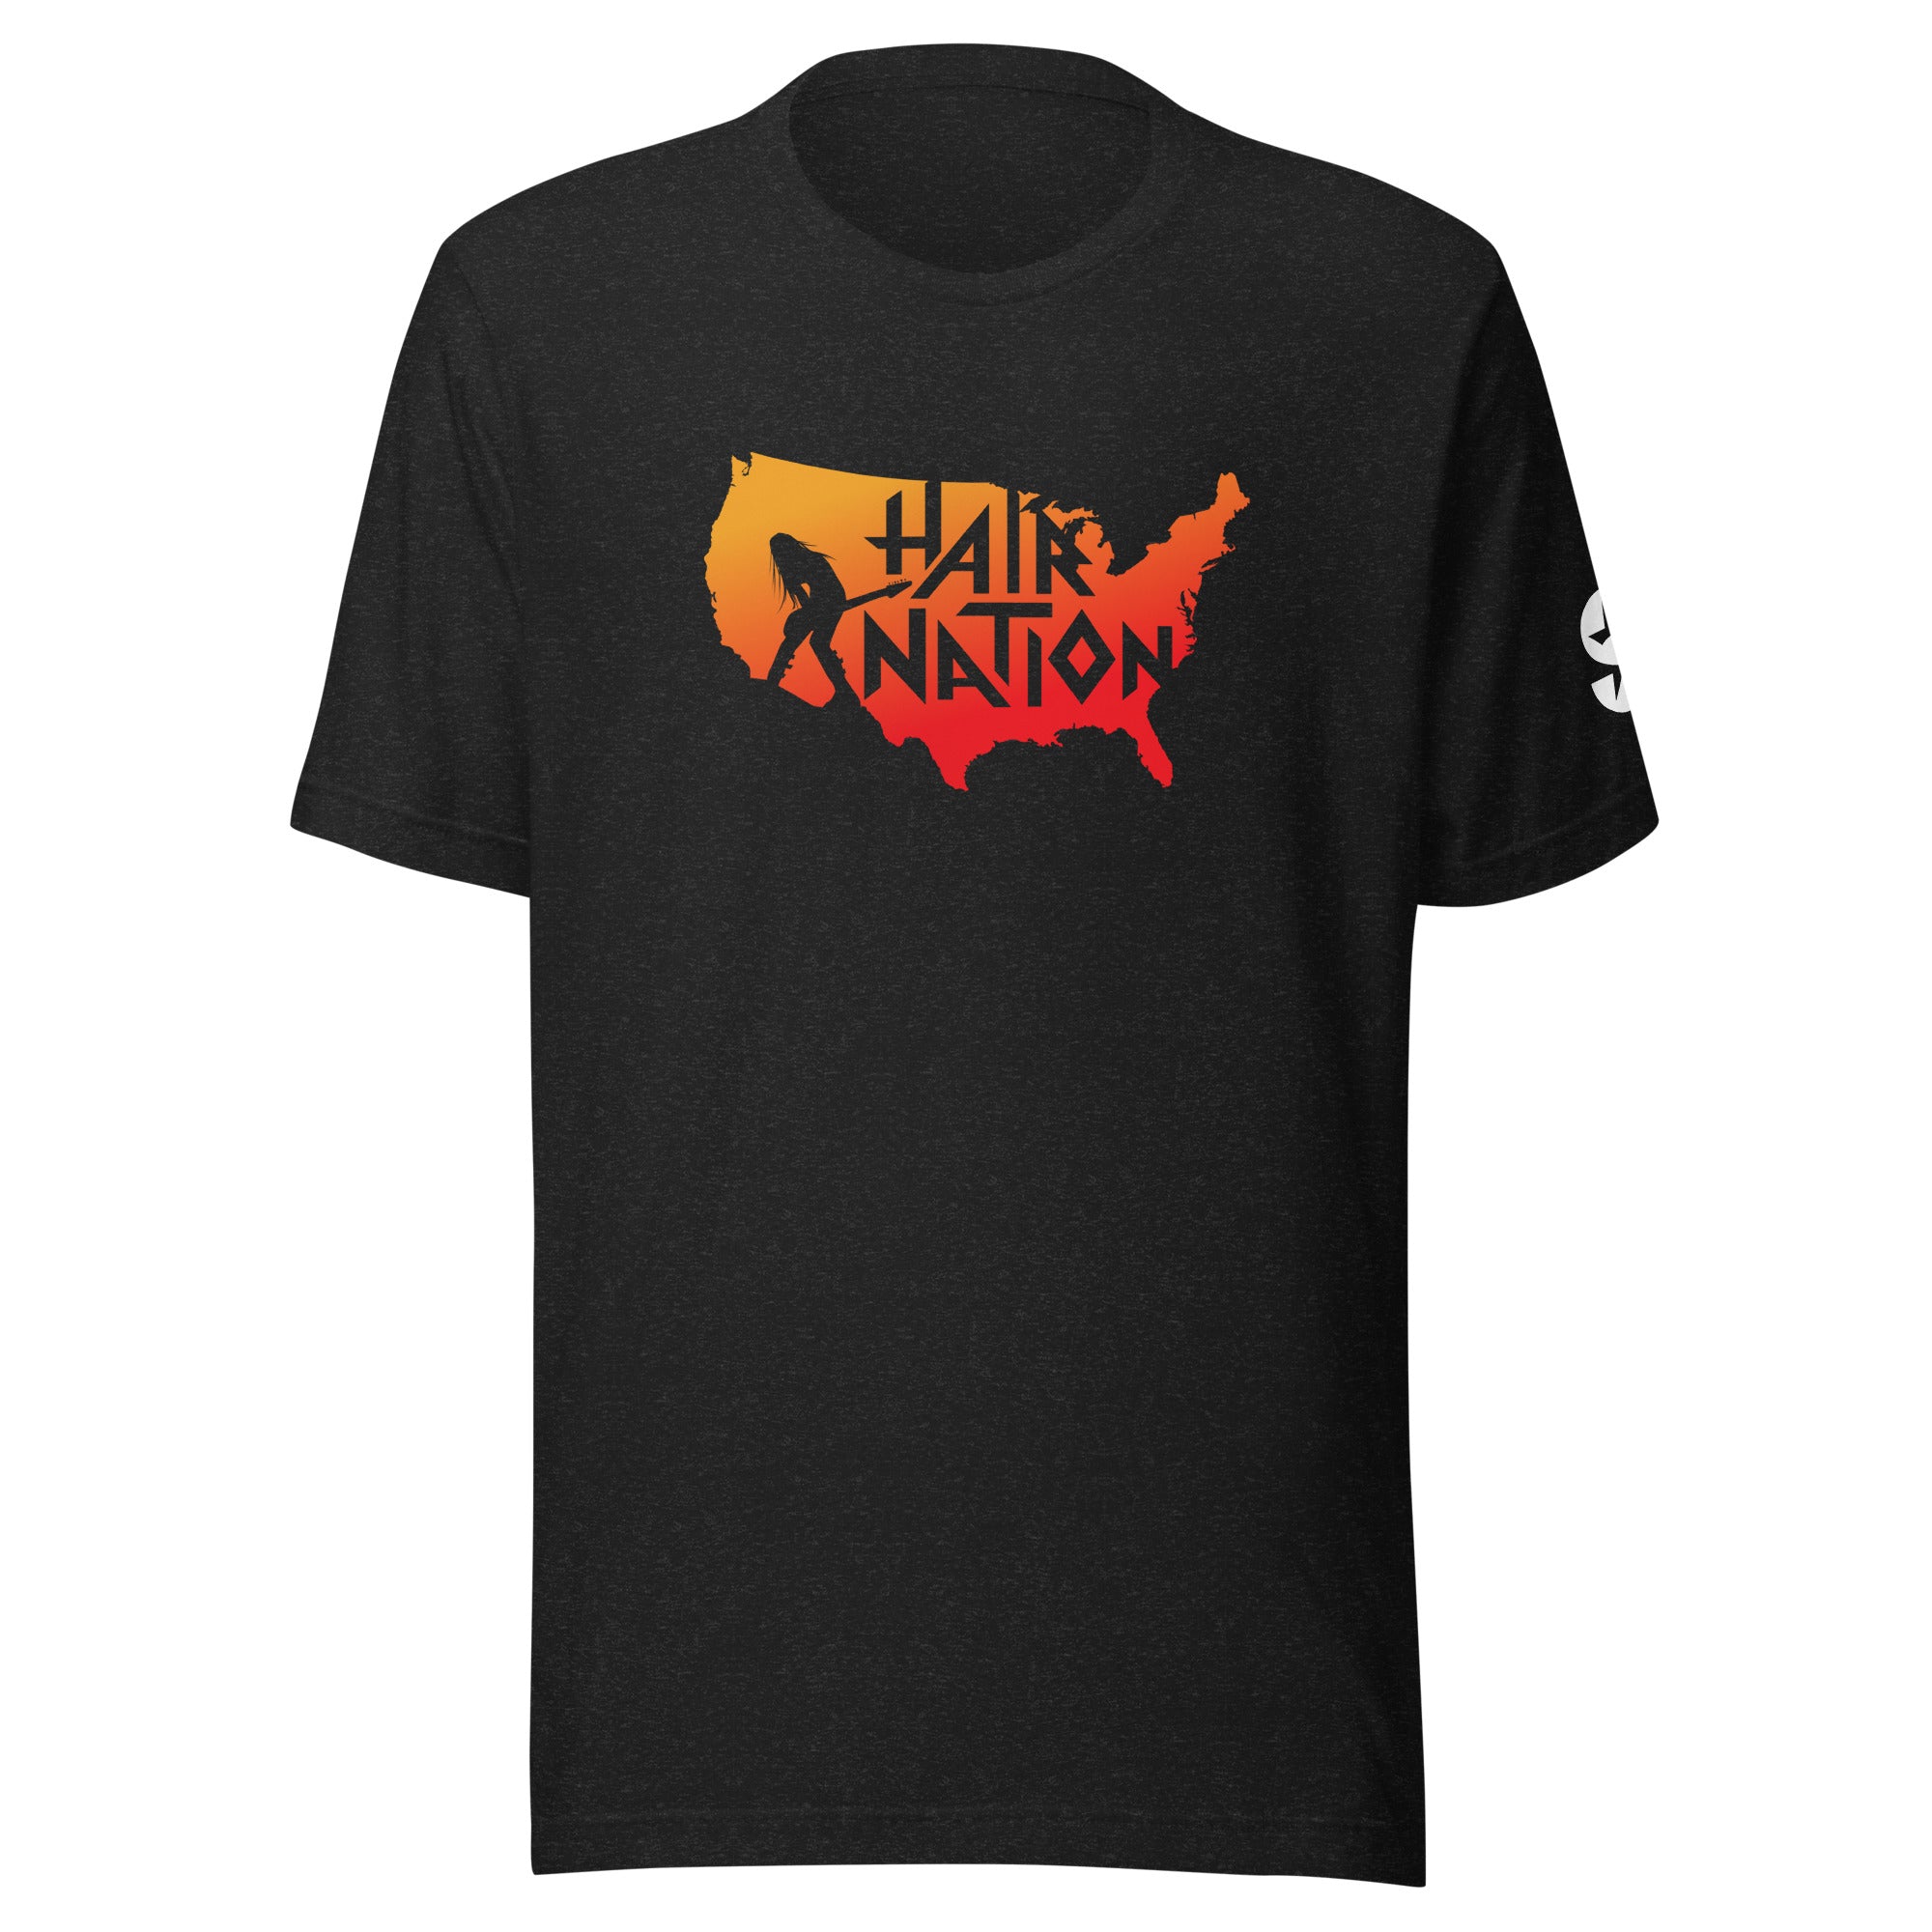 Hair Nation: Nation of Hair T-shirt